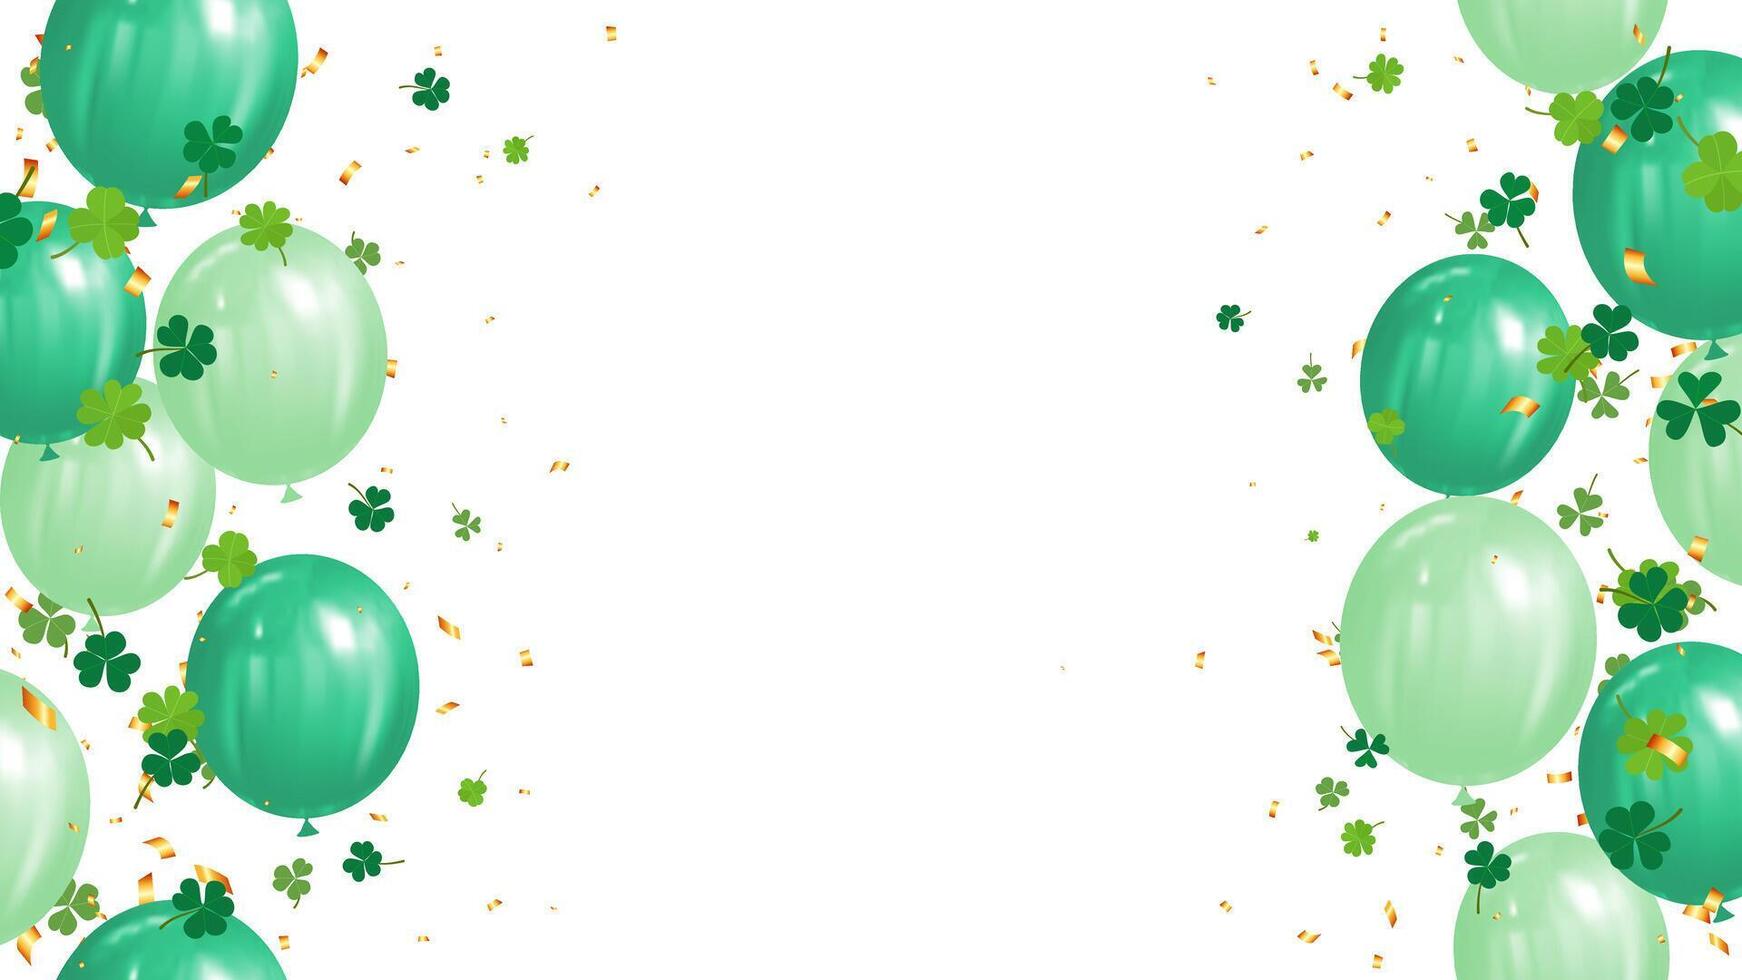 firande fest ram baner med grön ballonger bakgrund vektor illustration. kort lyx hälsning design